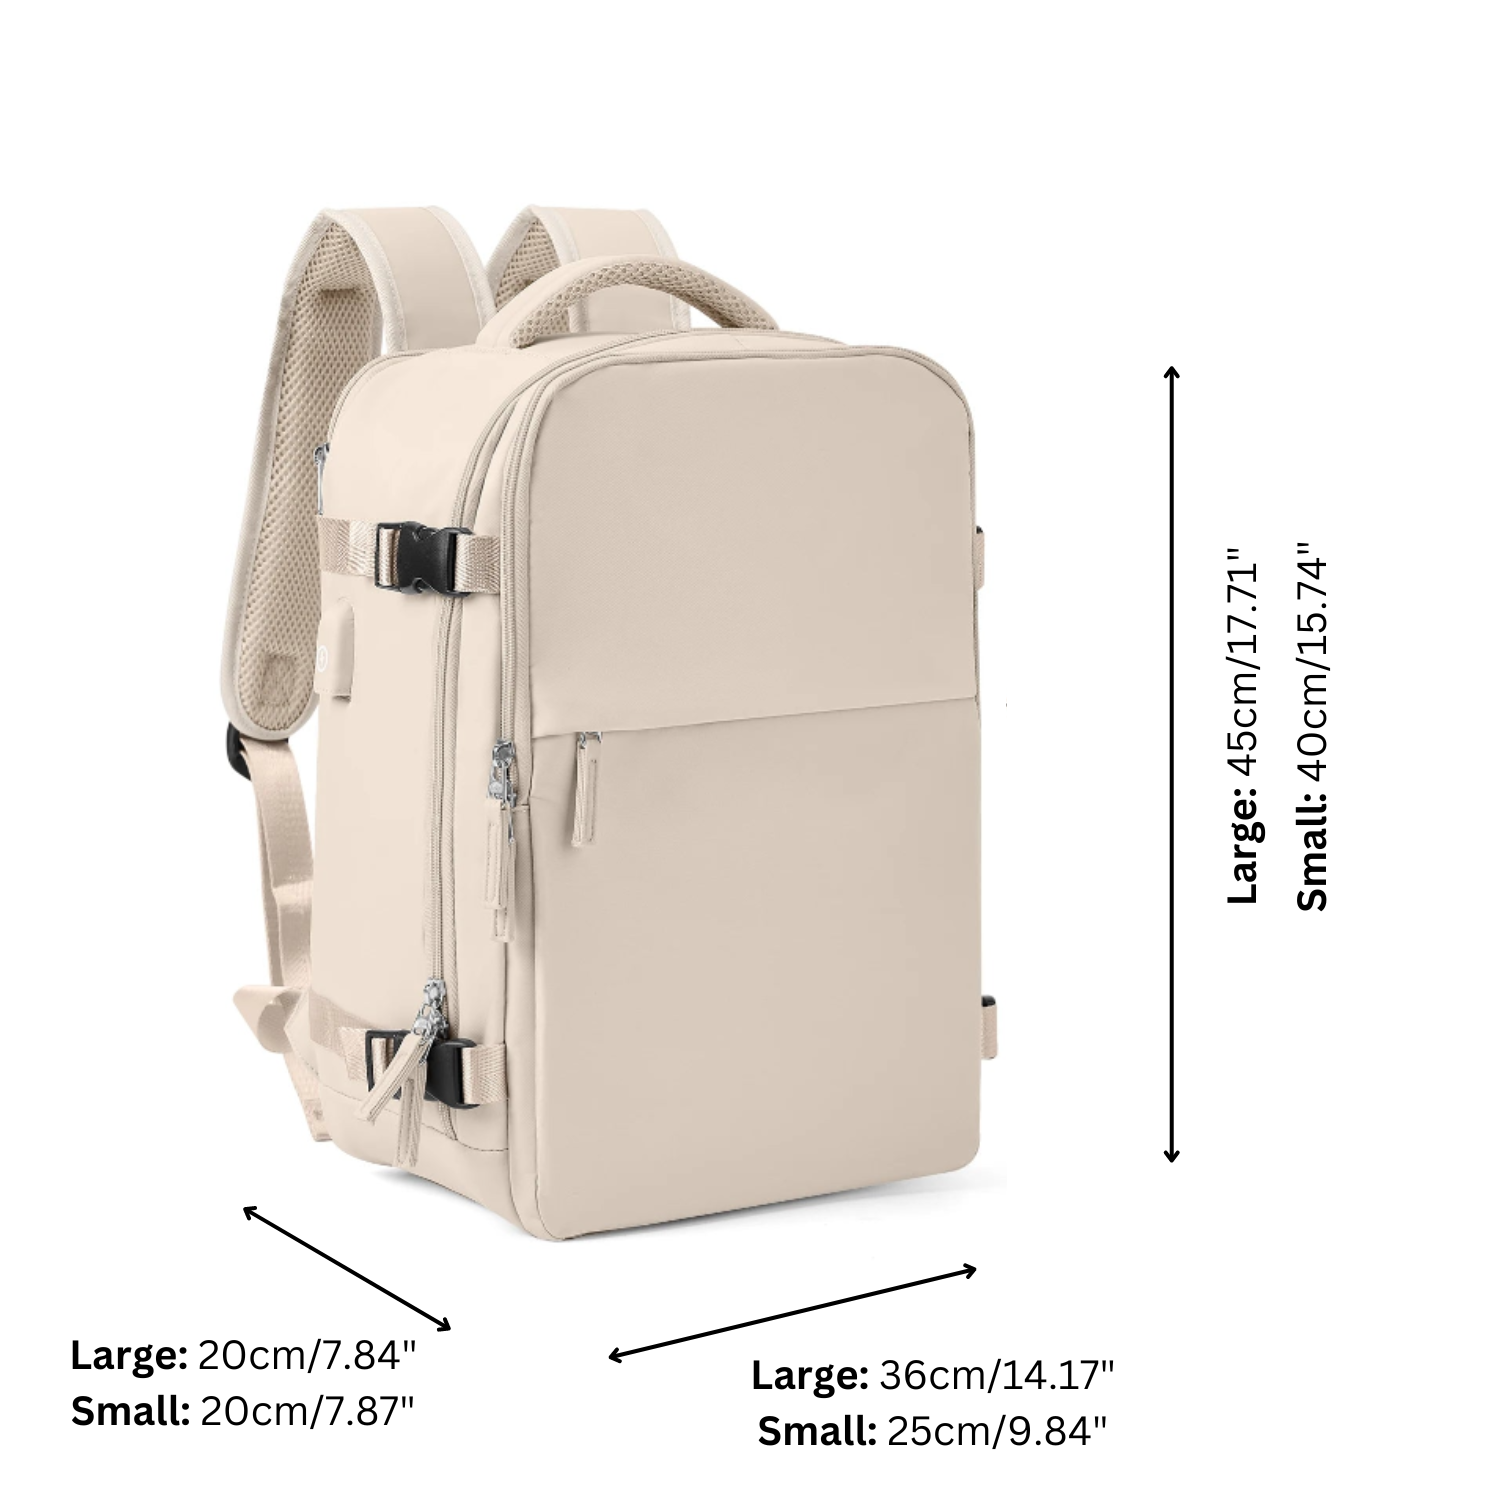 Travel-Optimized Carry-On Backpack for Ryanair & EasyJet